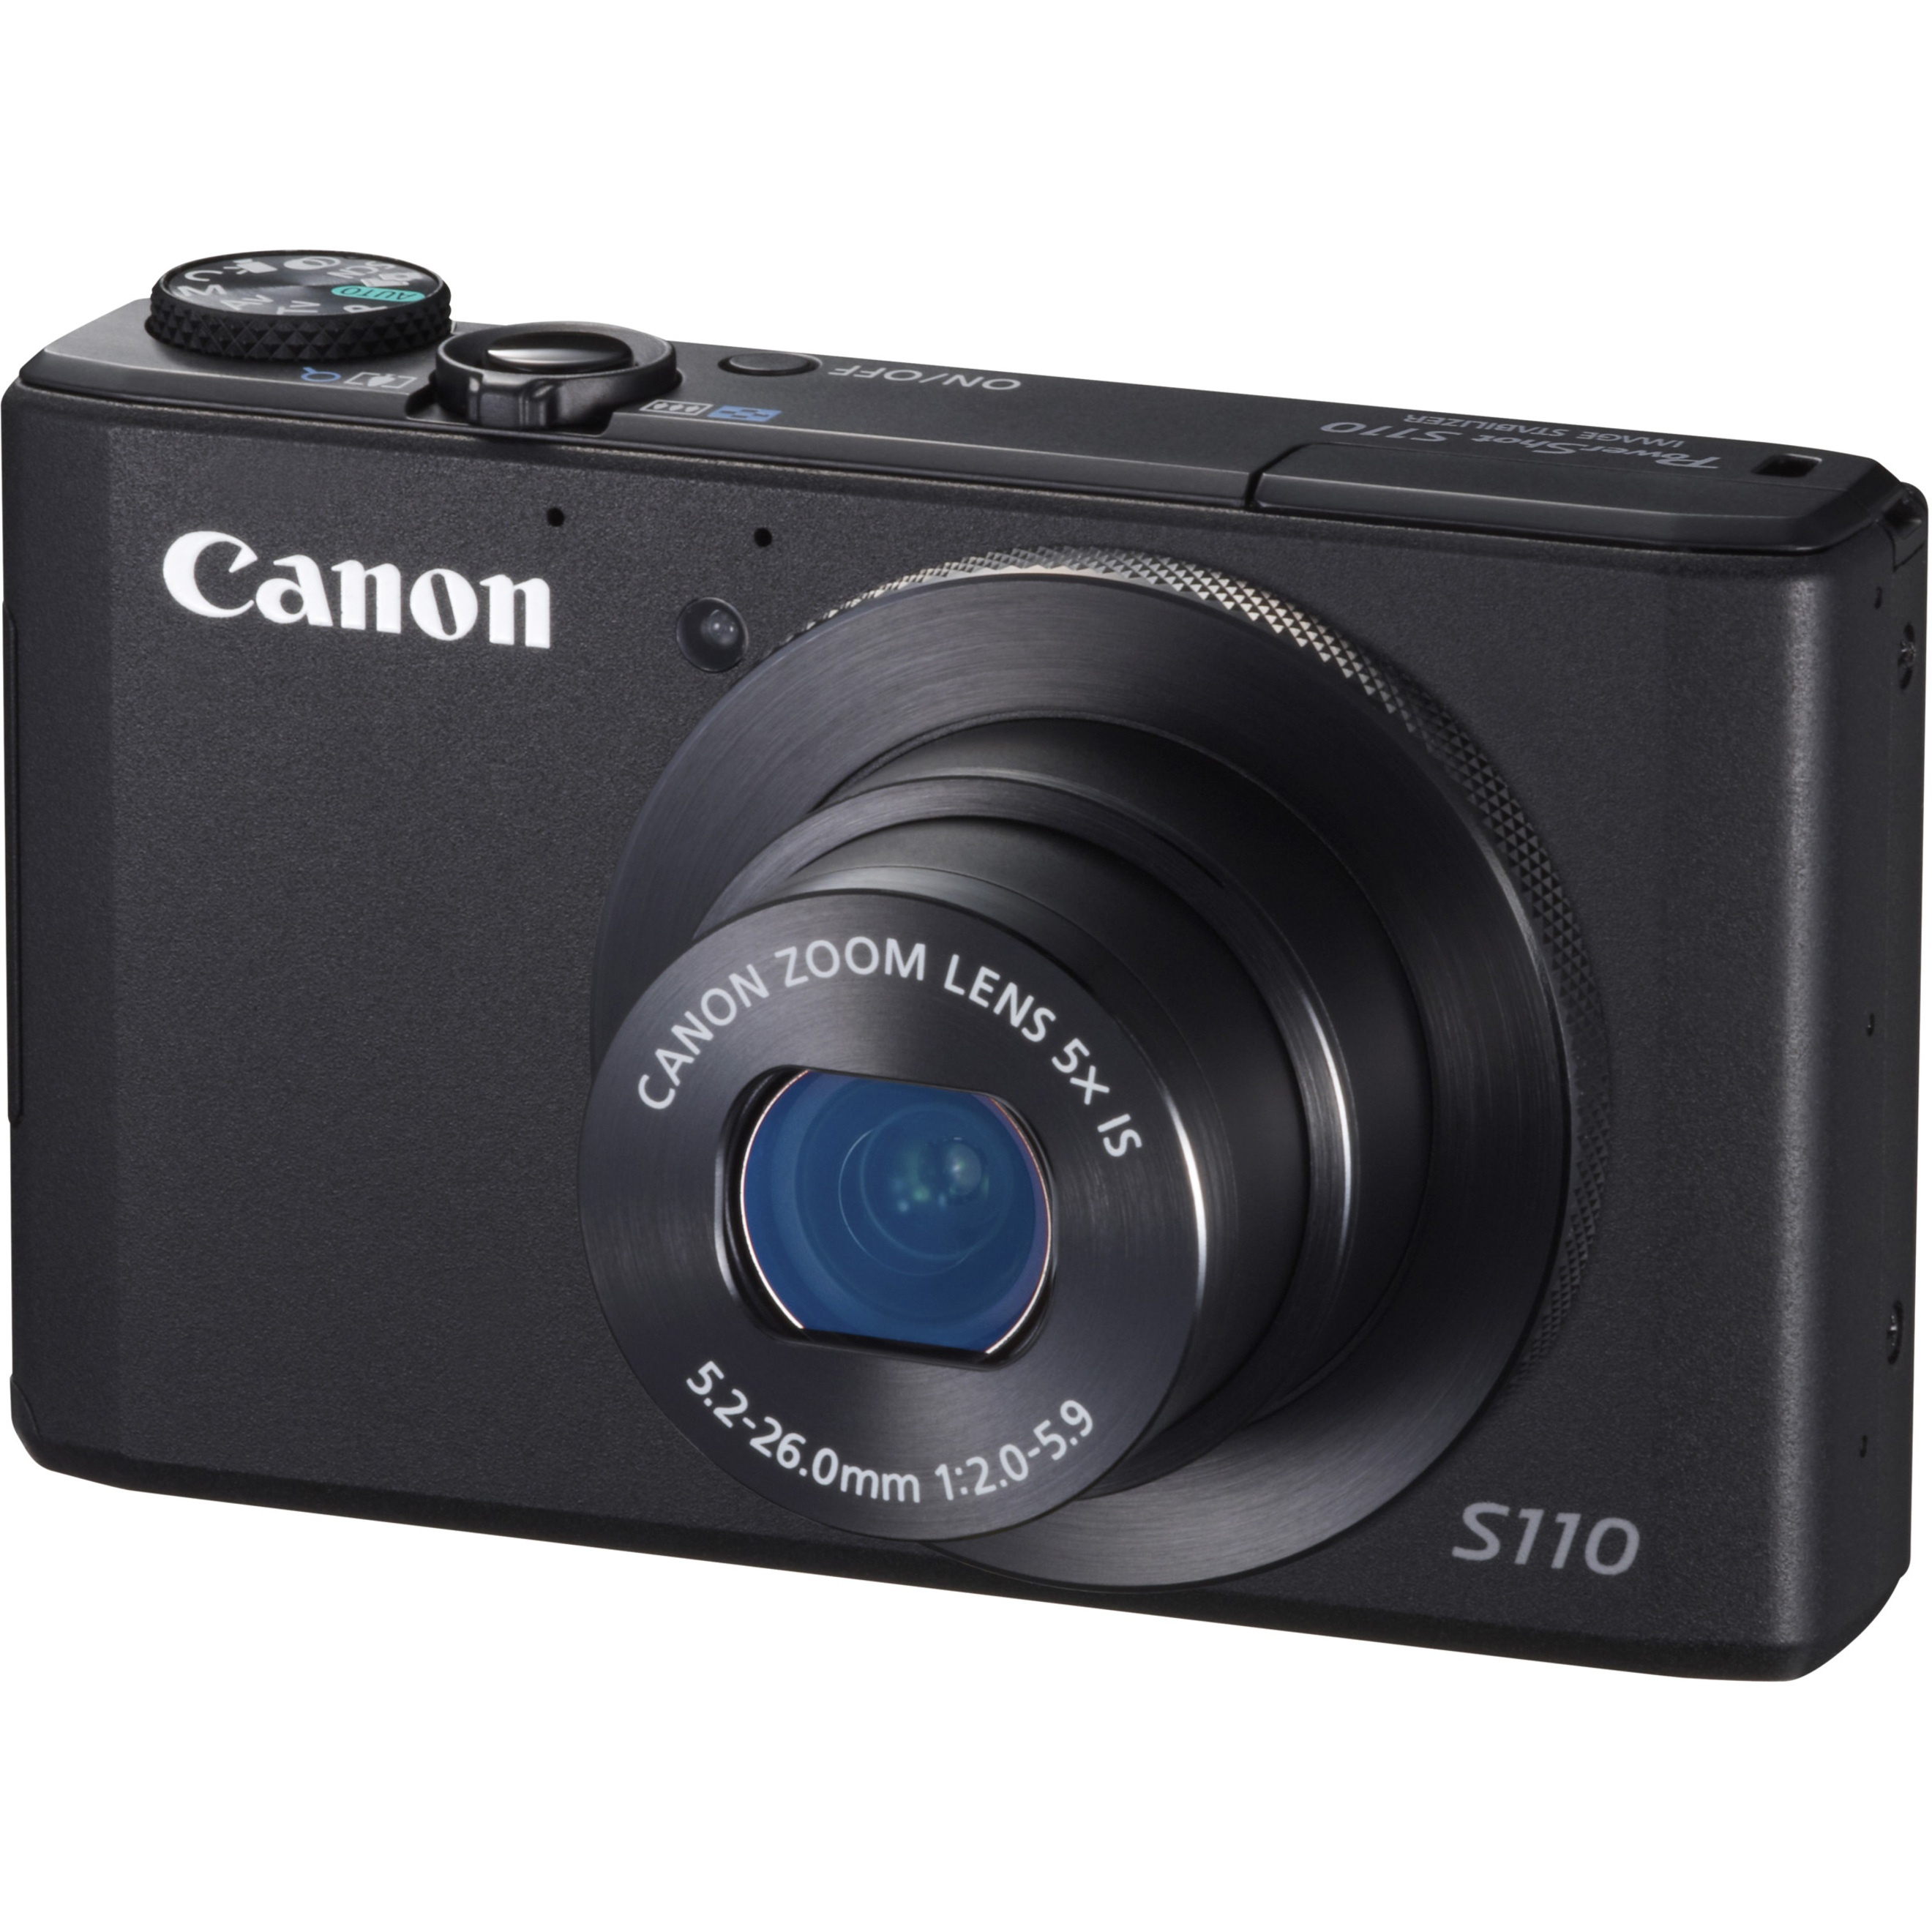 Canon PowerShot S110 12.1 Megapixel Compact Camera, Black - image 2 of 5